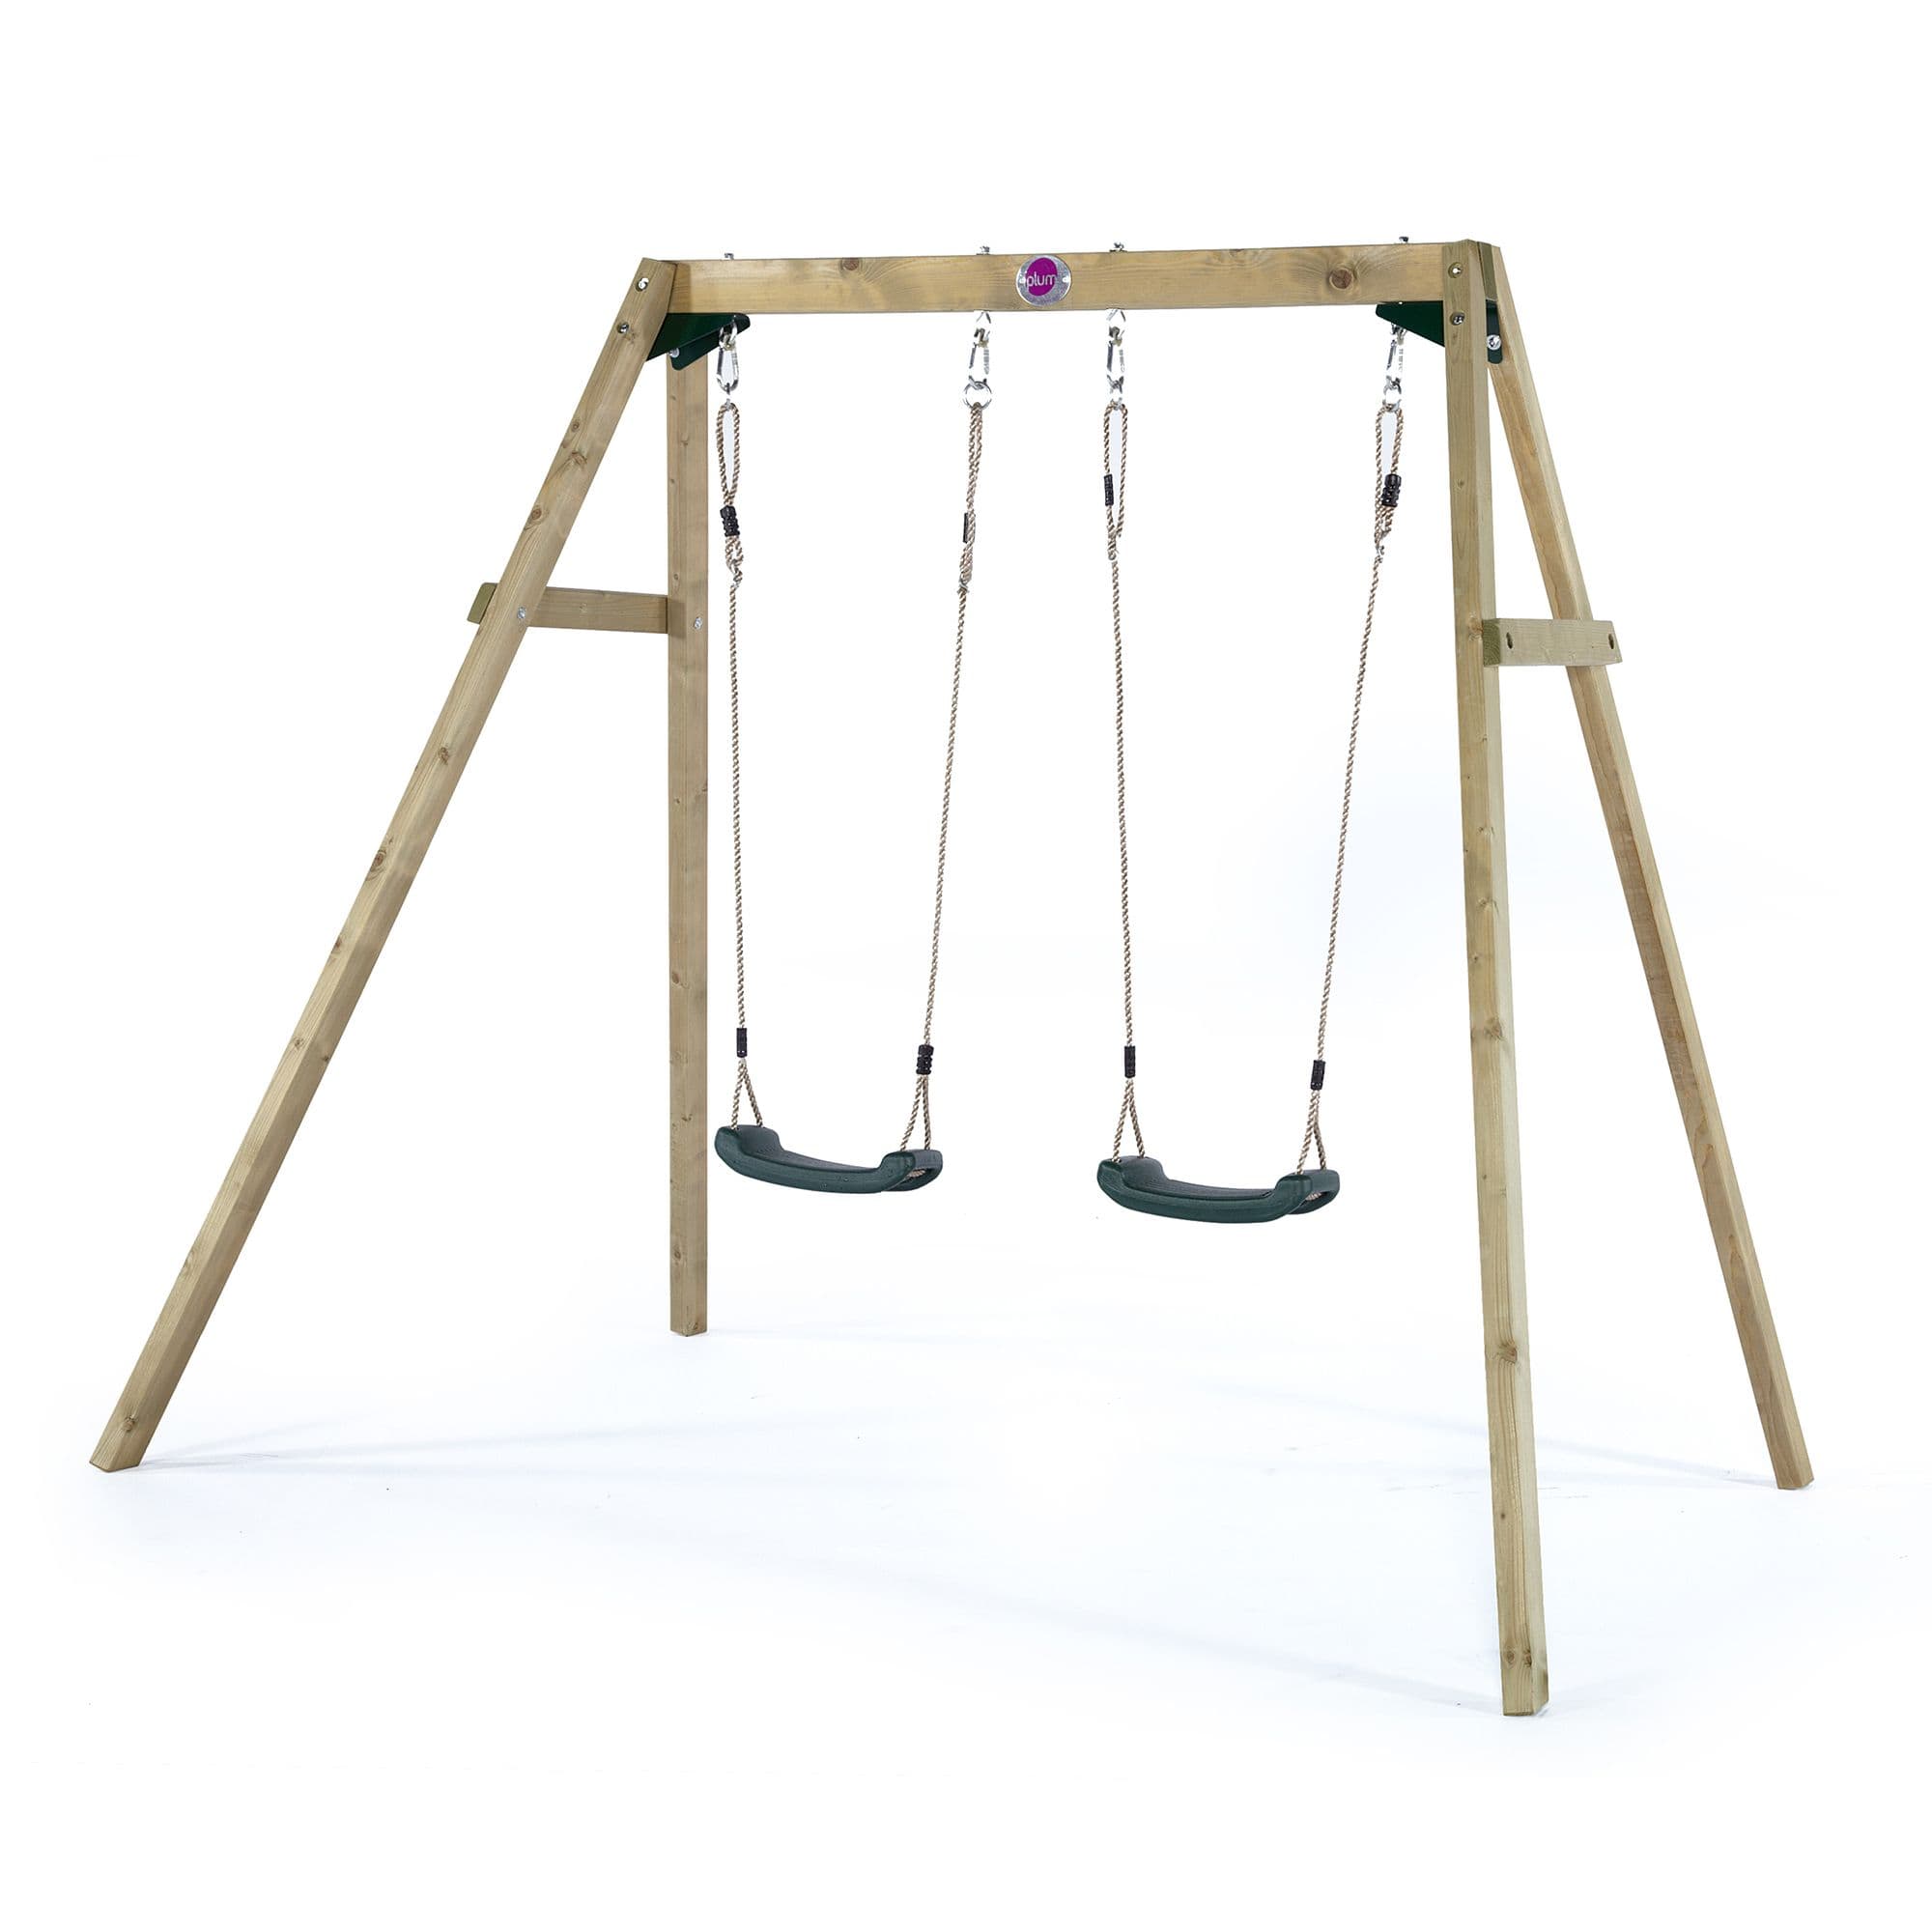 Plum® Wooden Double Swing Set